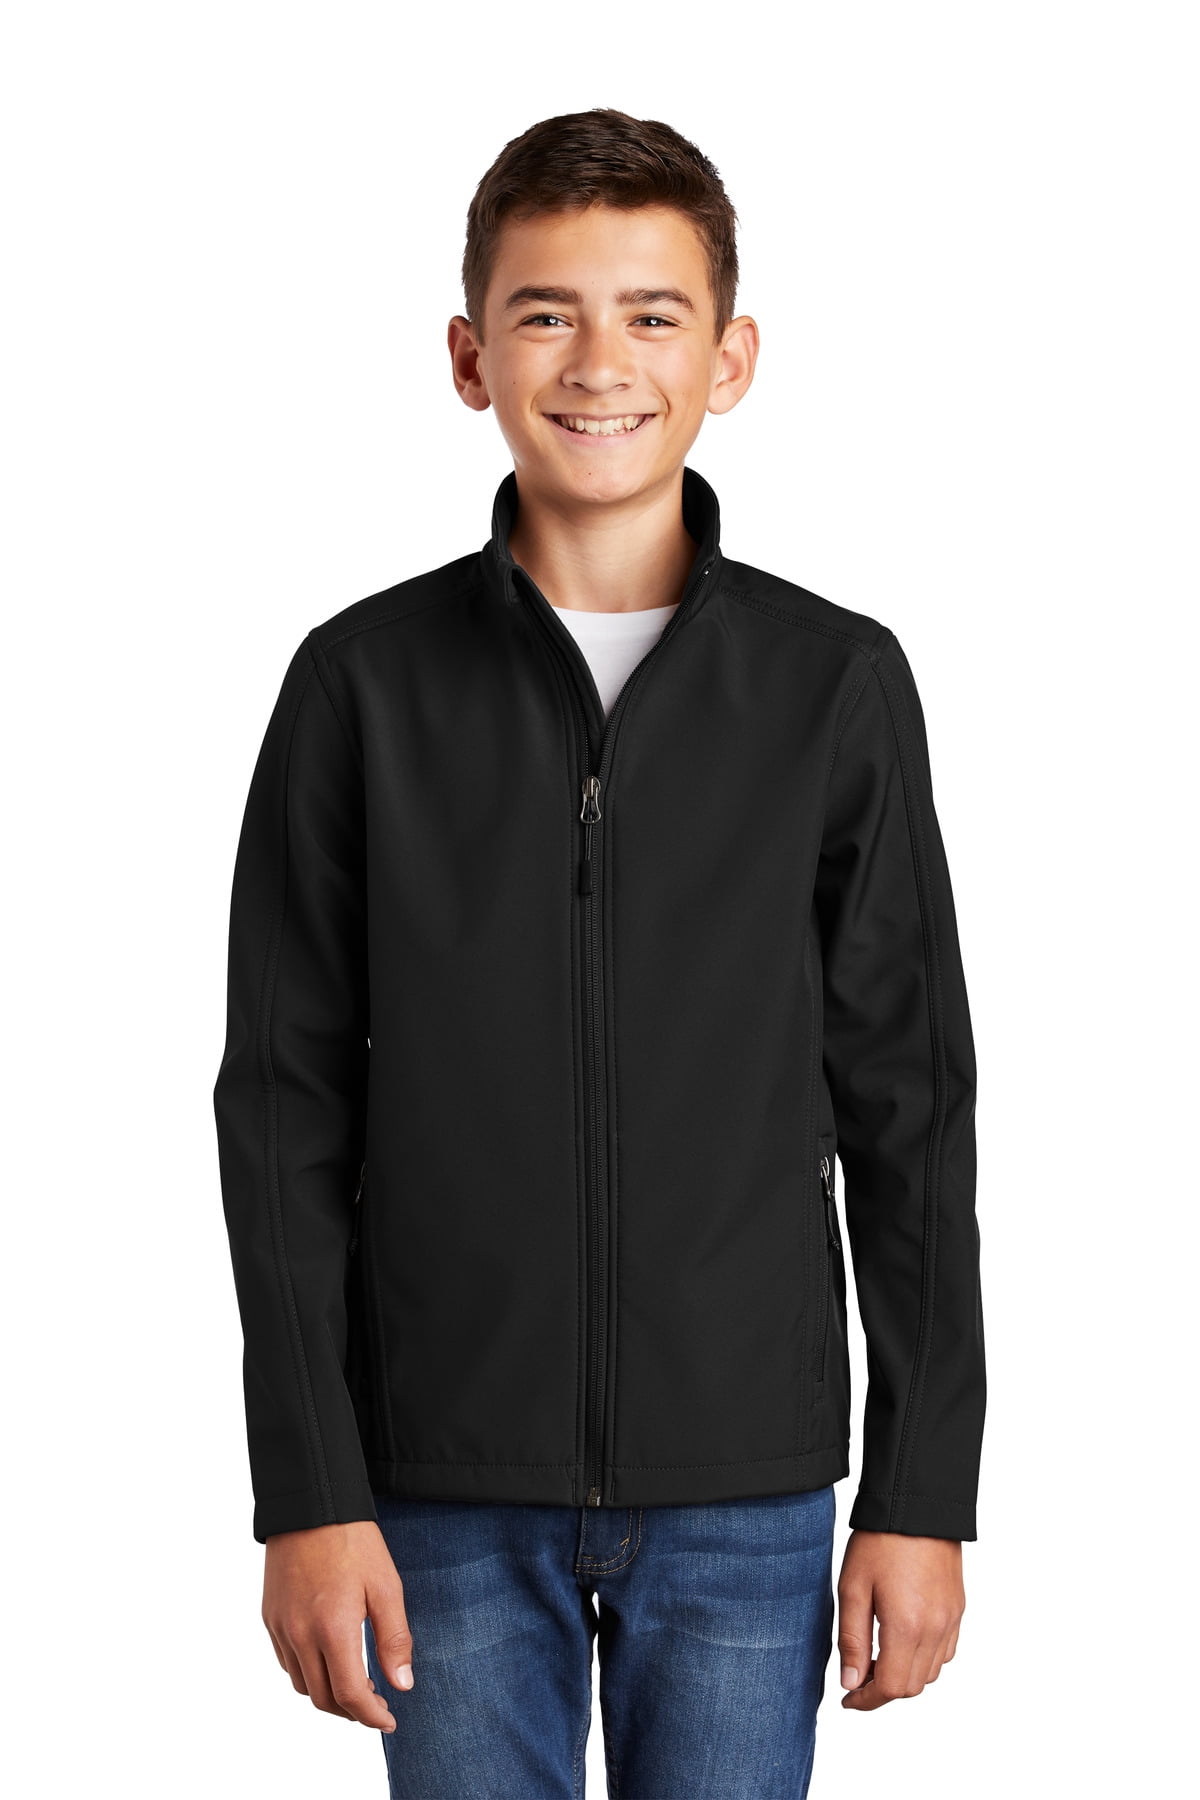 Y217 Black S Port Authority Youth Value Fleece Jacket